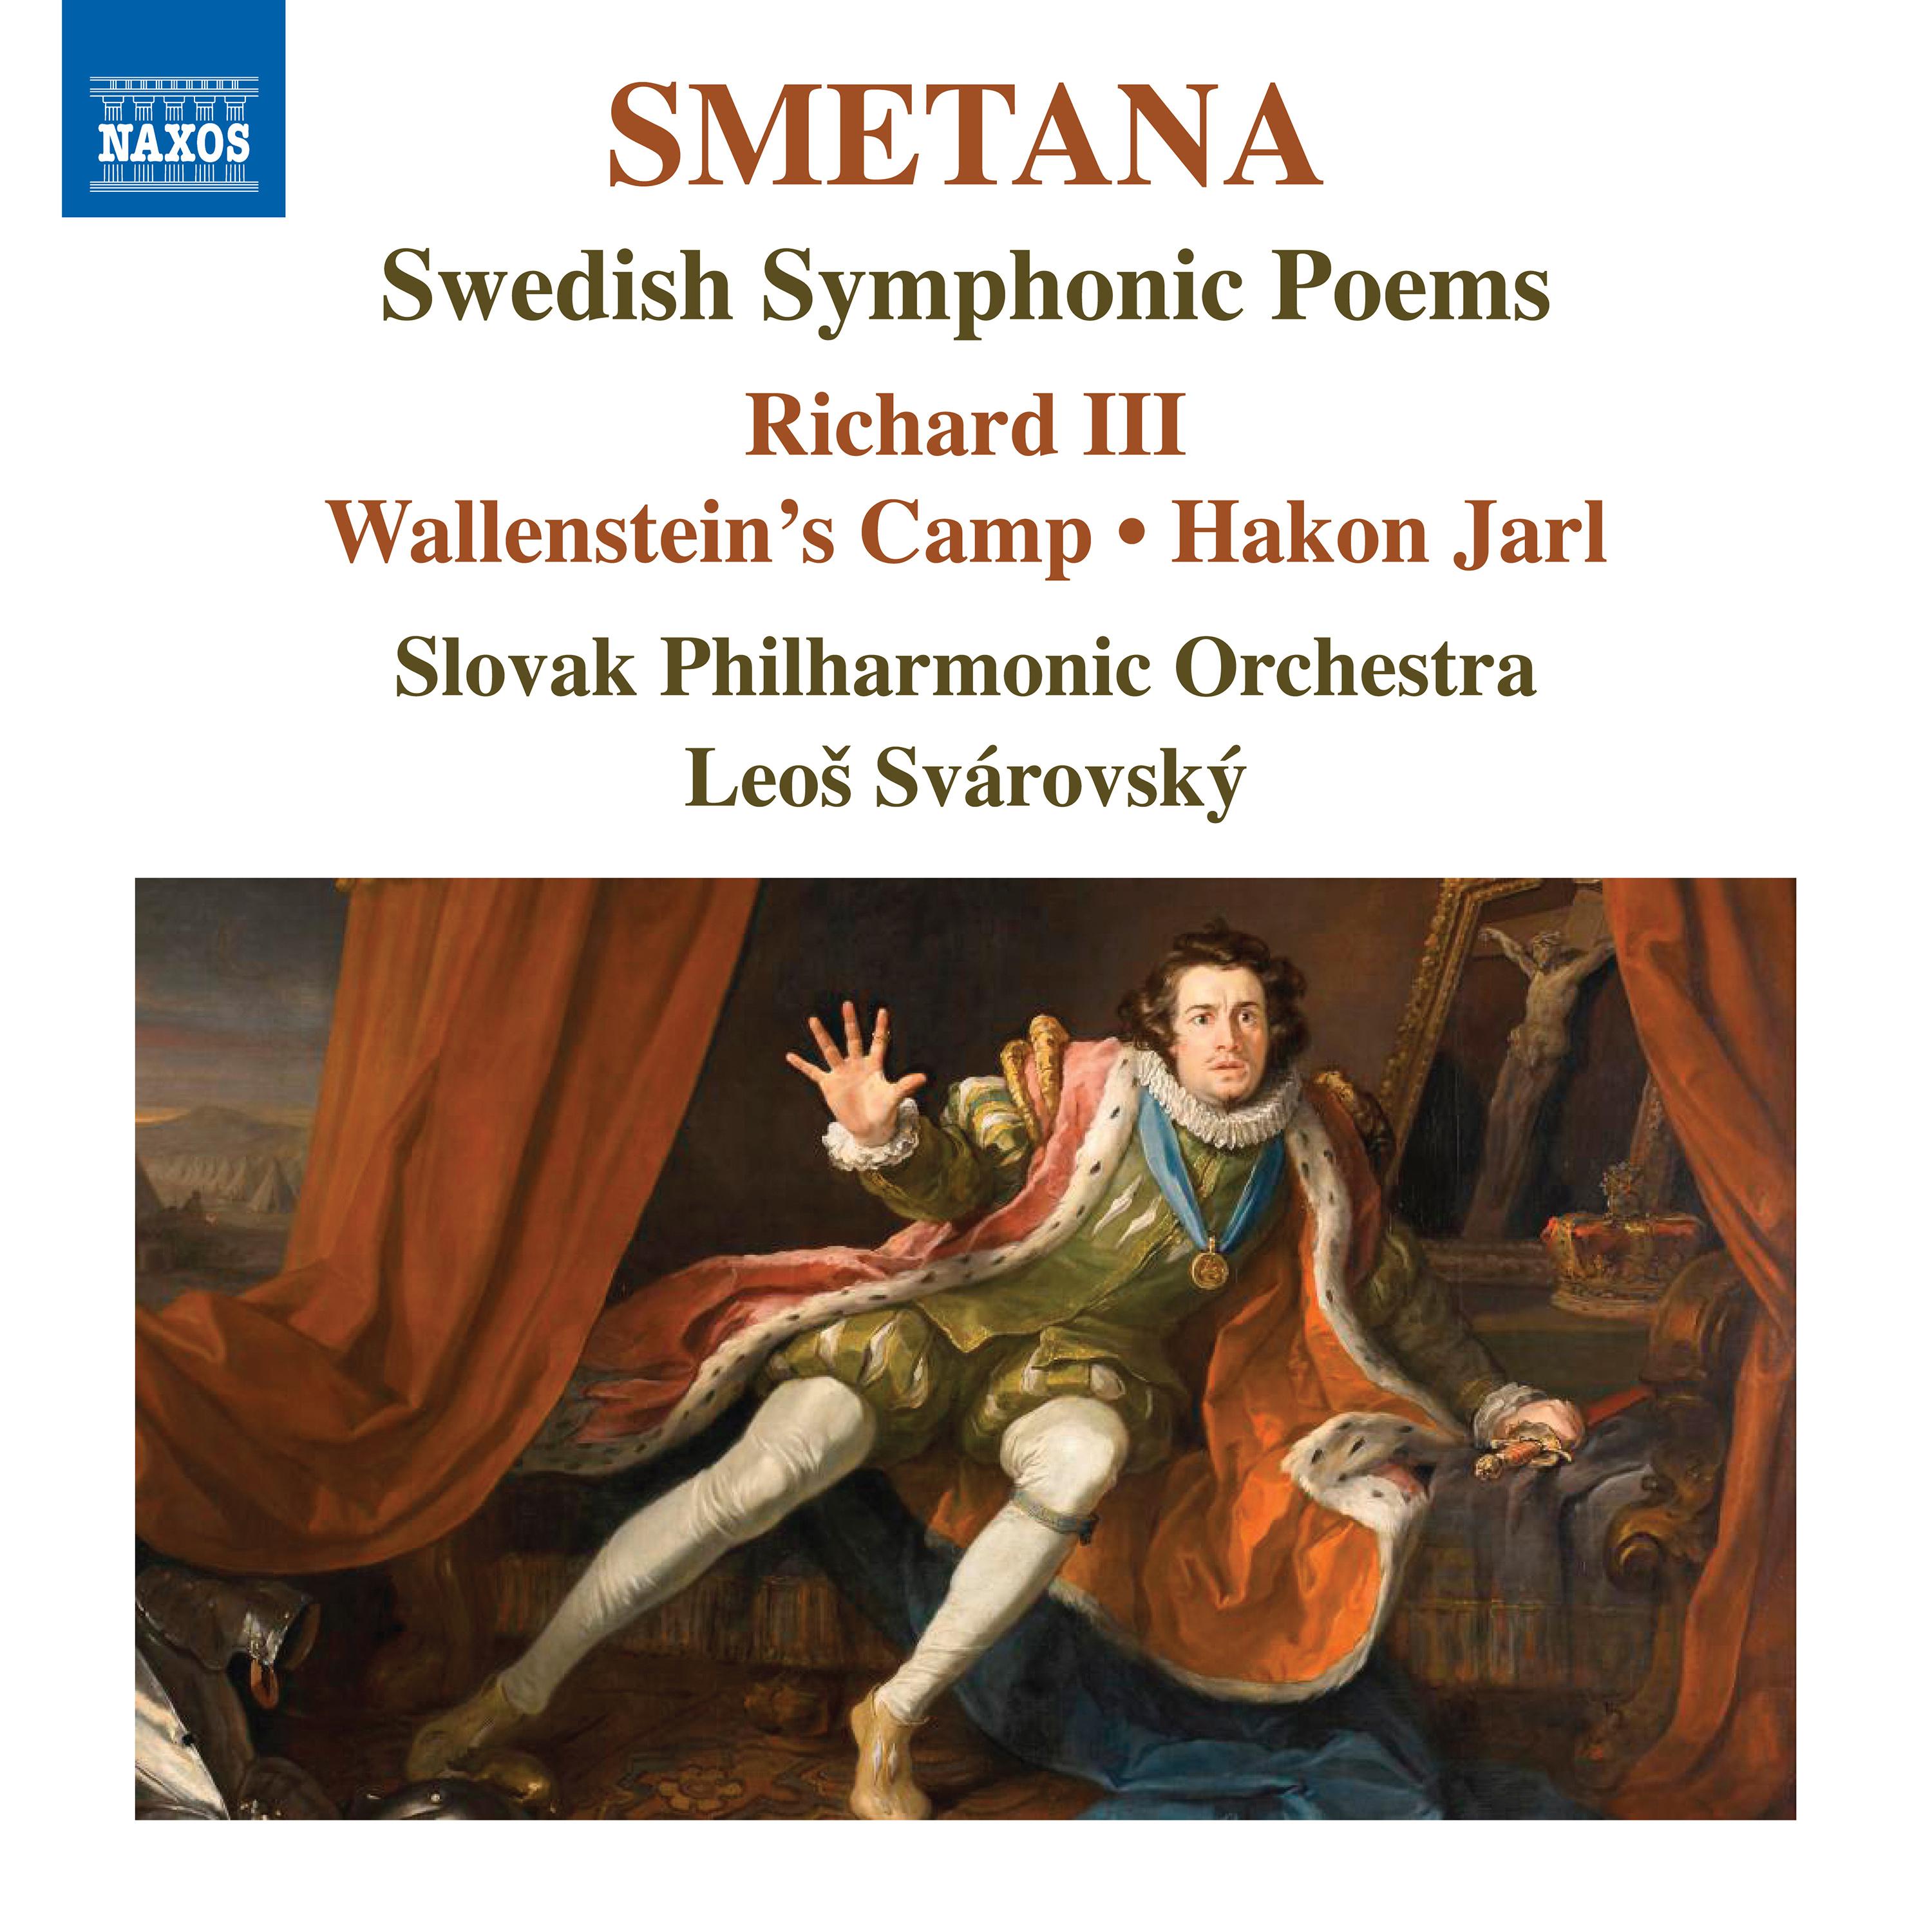 SMETANA, B.: Swedish Symphonic Poems  Richard III  Wallenstein' s Camp  Hakon Jarl Slovak Philharmonic, Sva rovsk